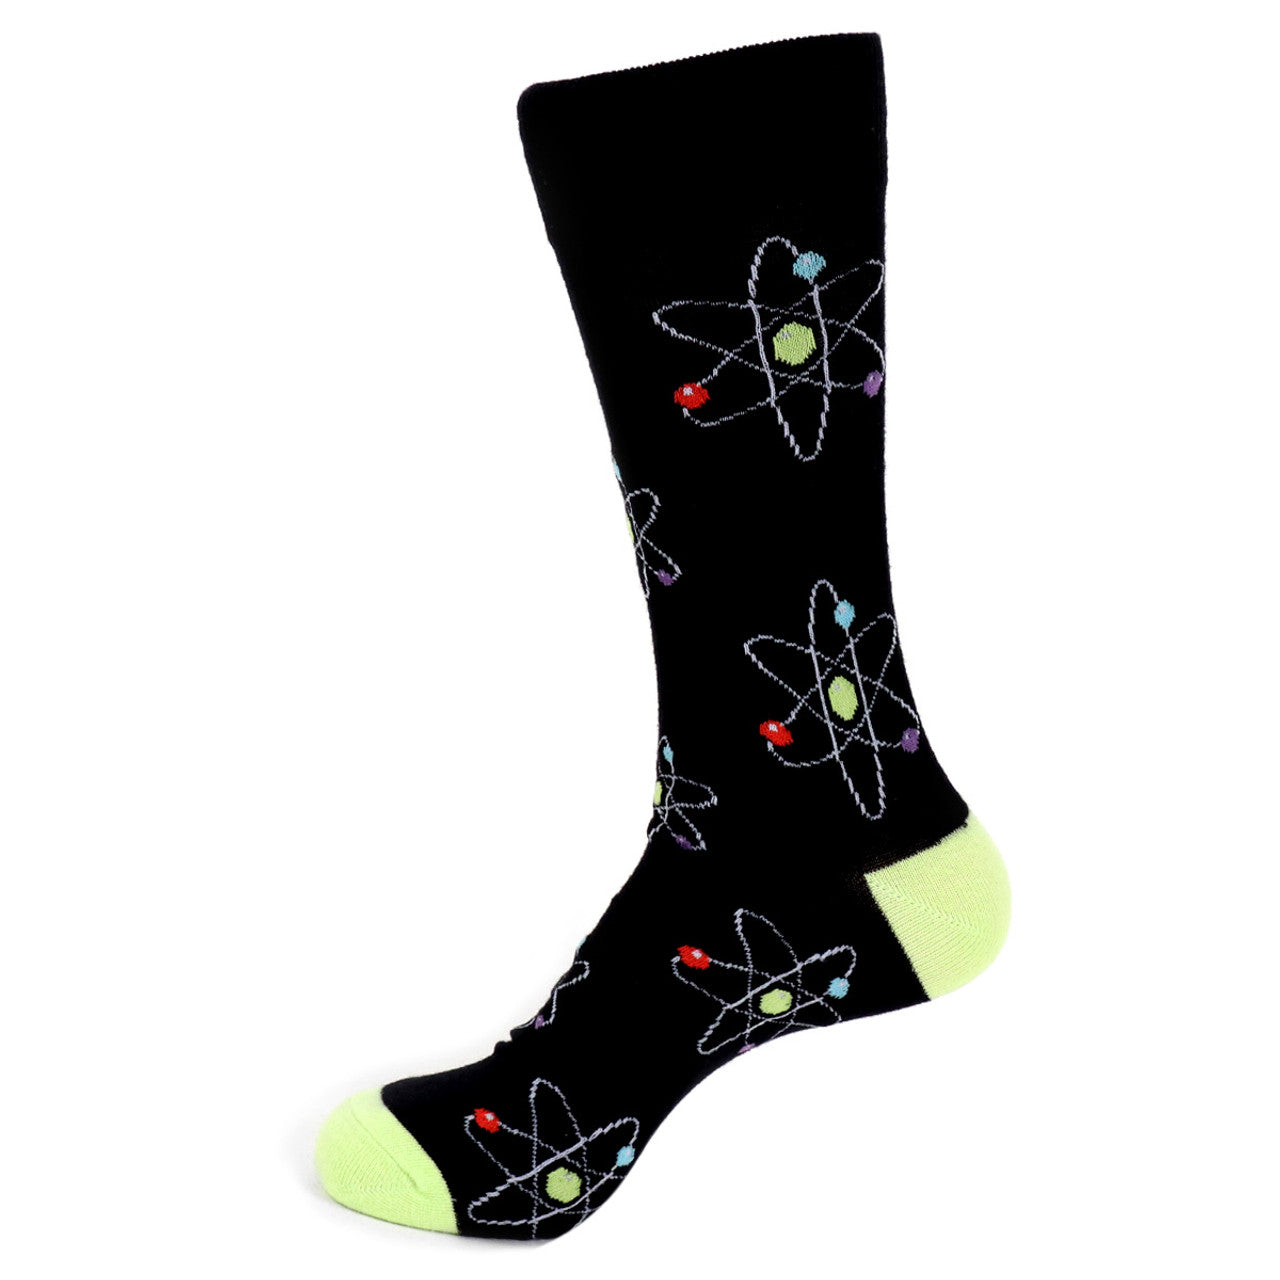 Selini New York - Socks Men's Chemistry